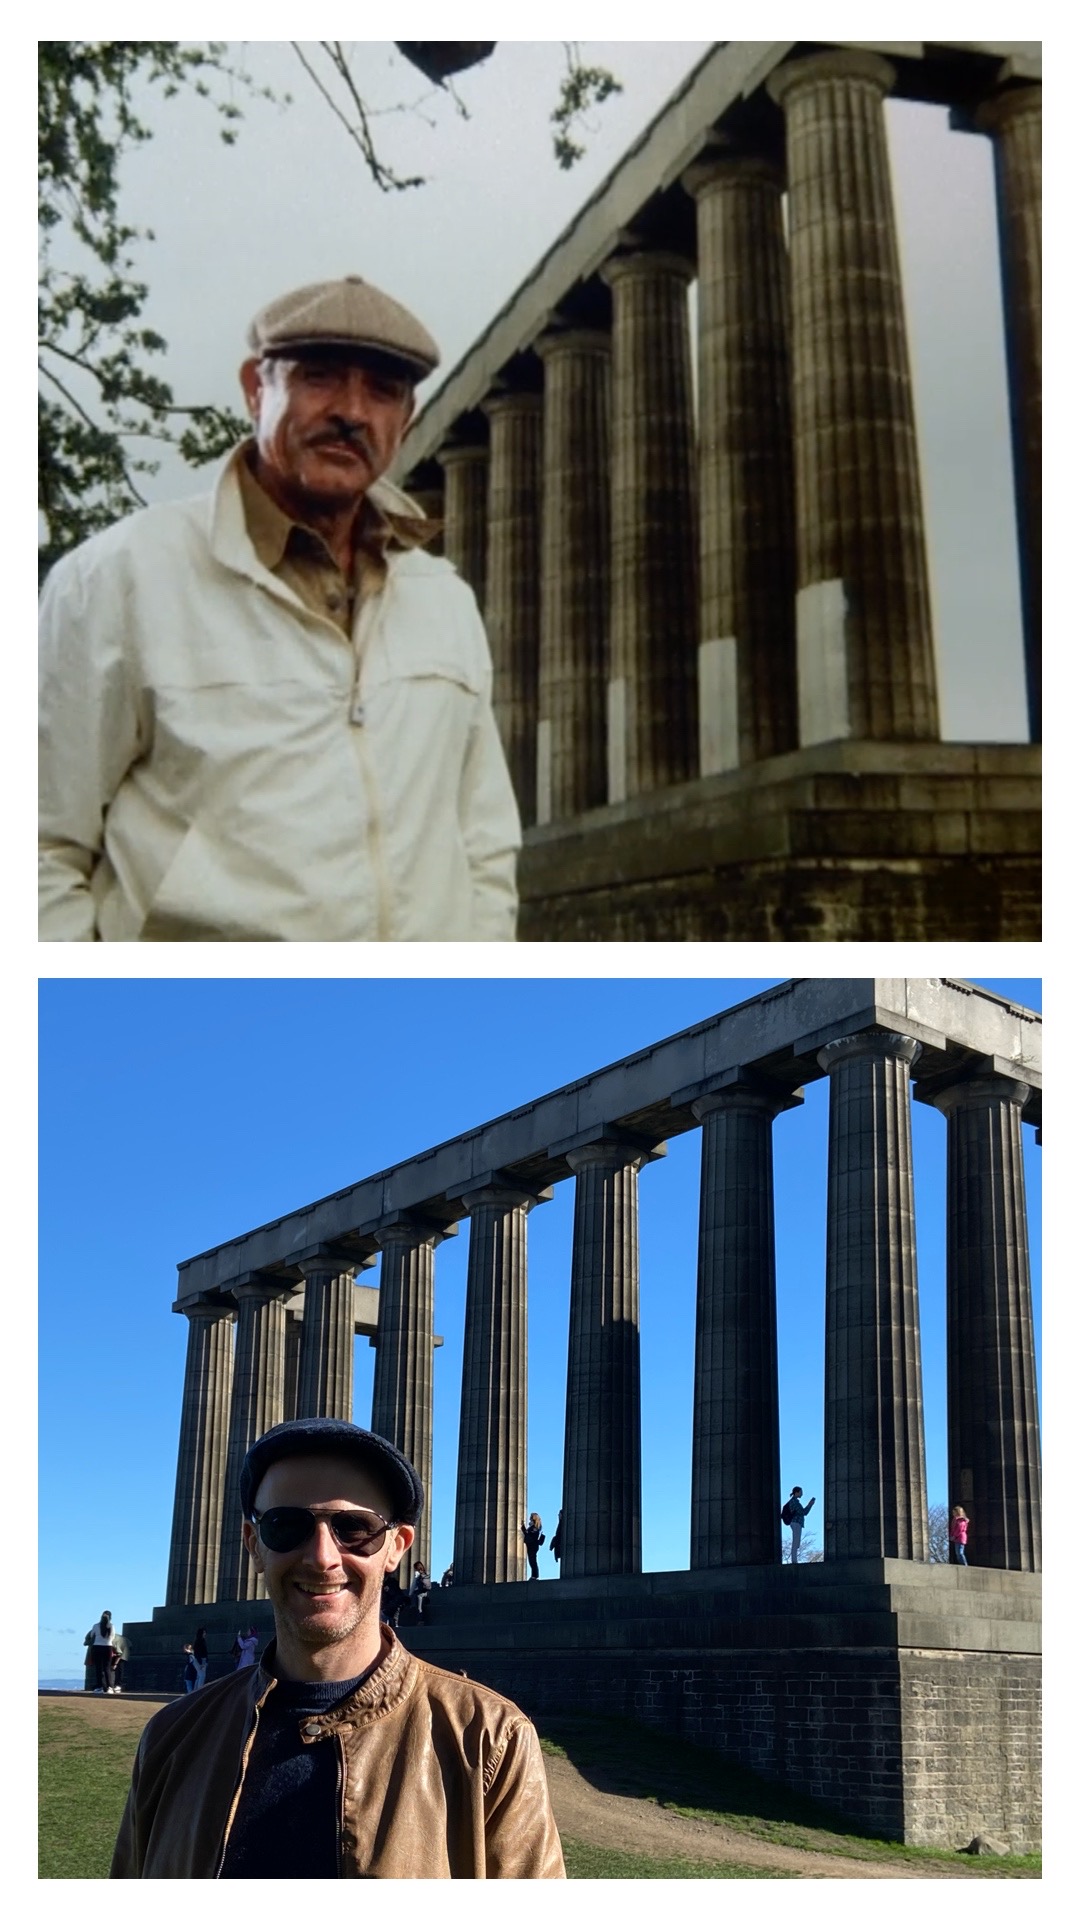 Sean Connery at the Parthenon